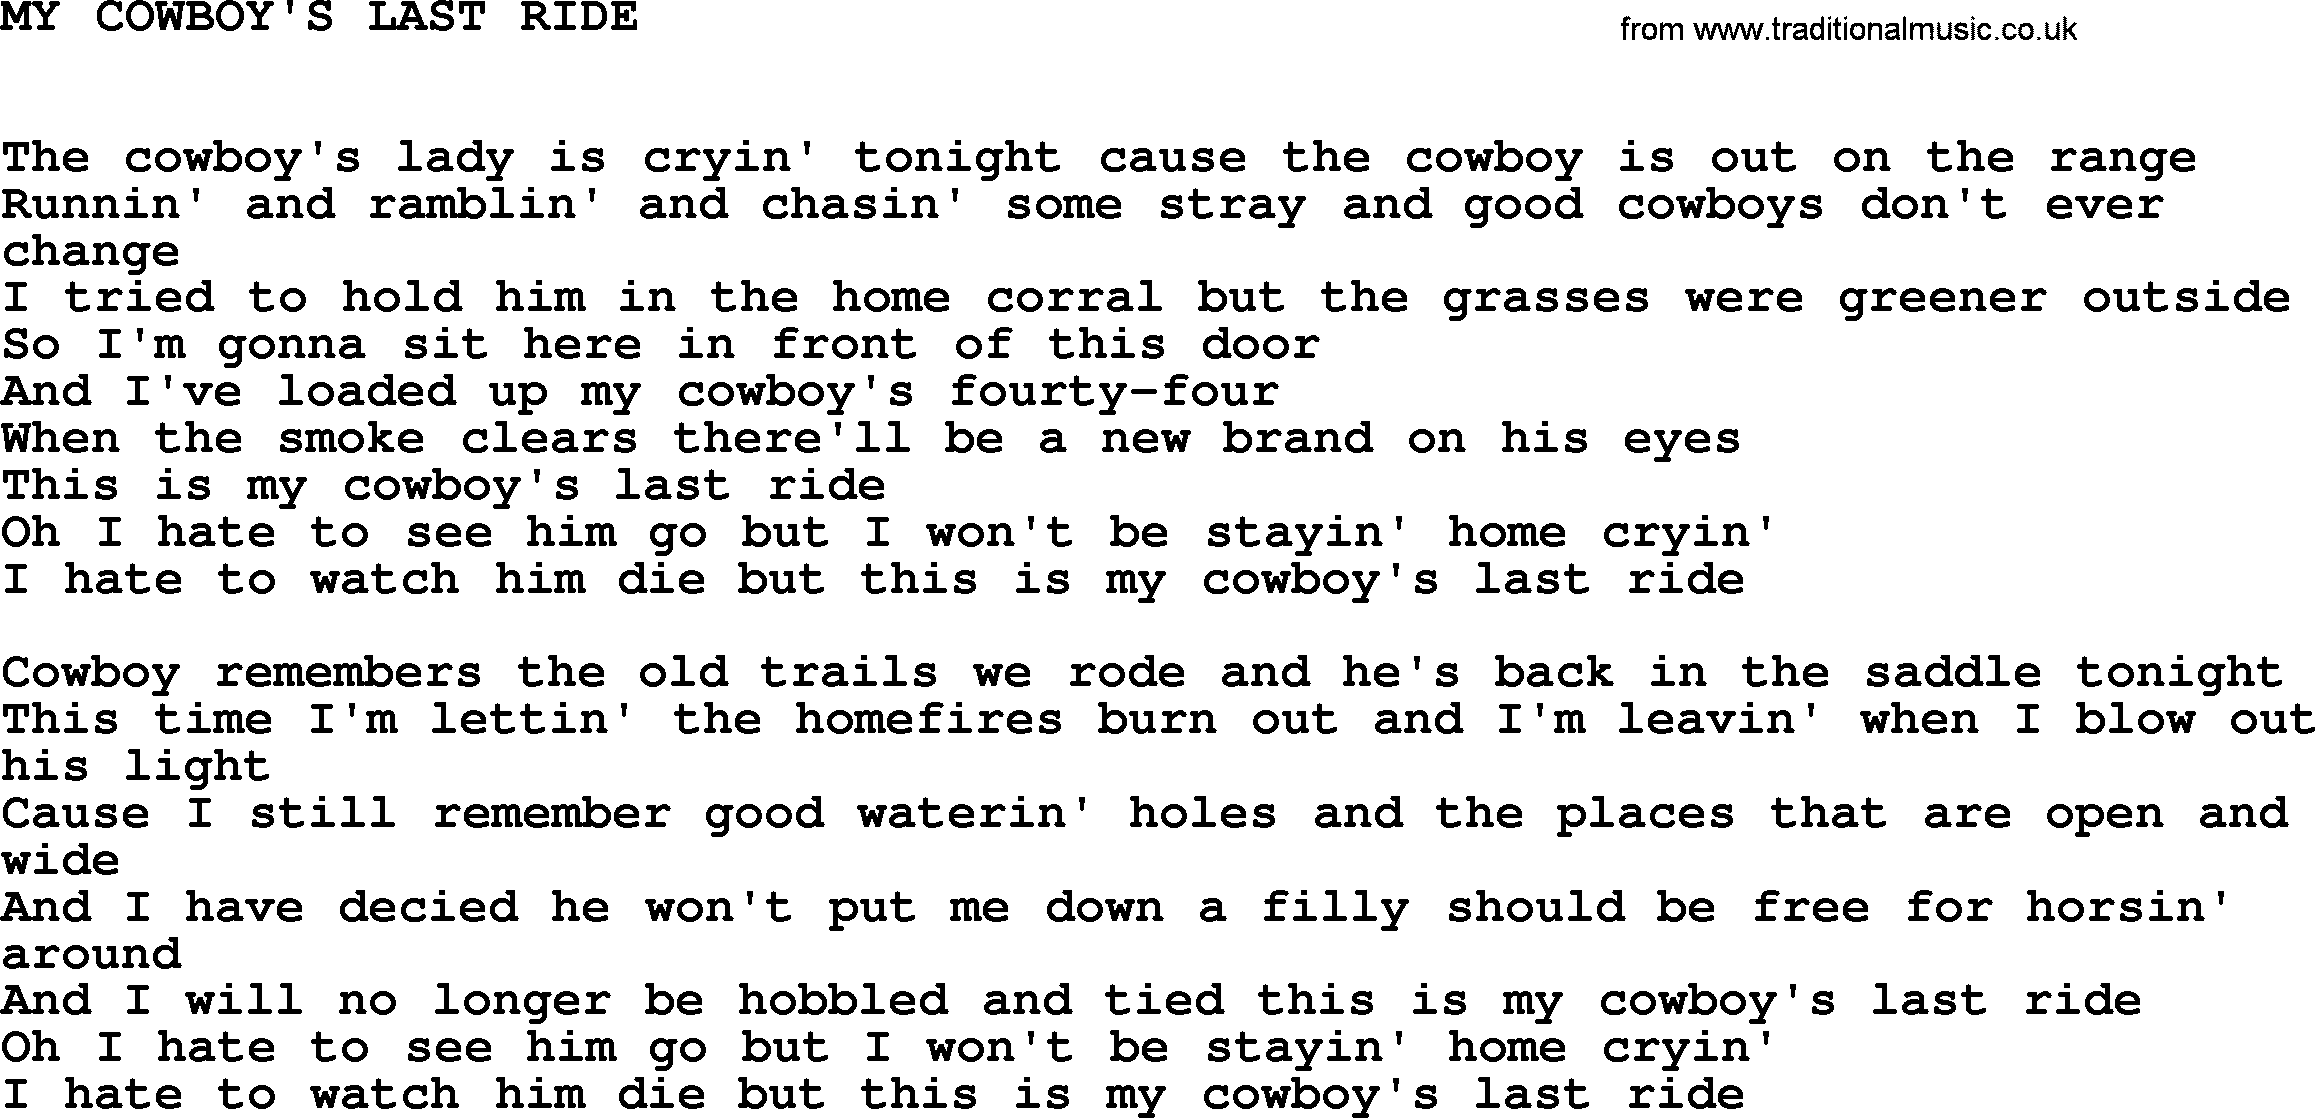 Johnny Cash song My Cowboy's Last Ride.txt lyrics